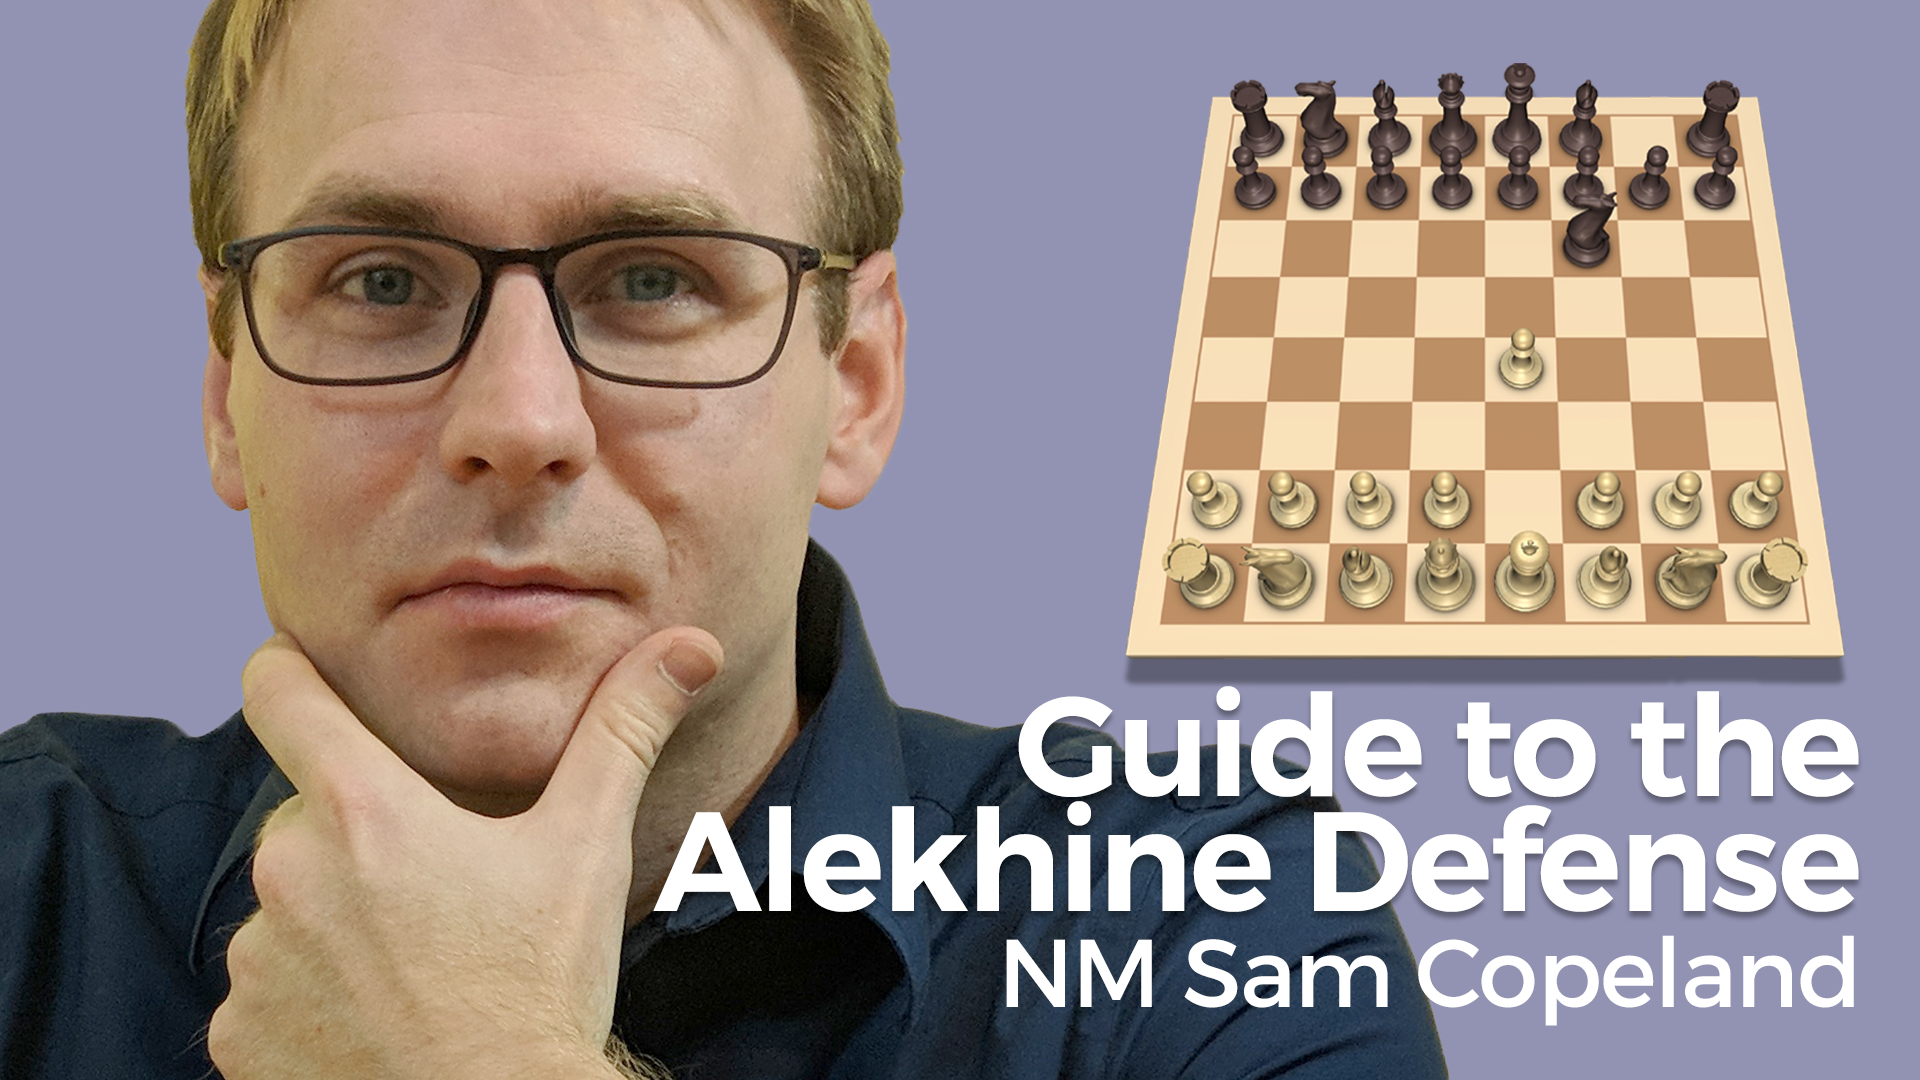 Alekhine's Defense: Neutralizing The 4 Pawns Attack 